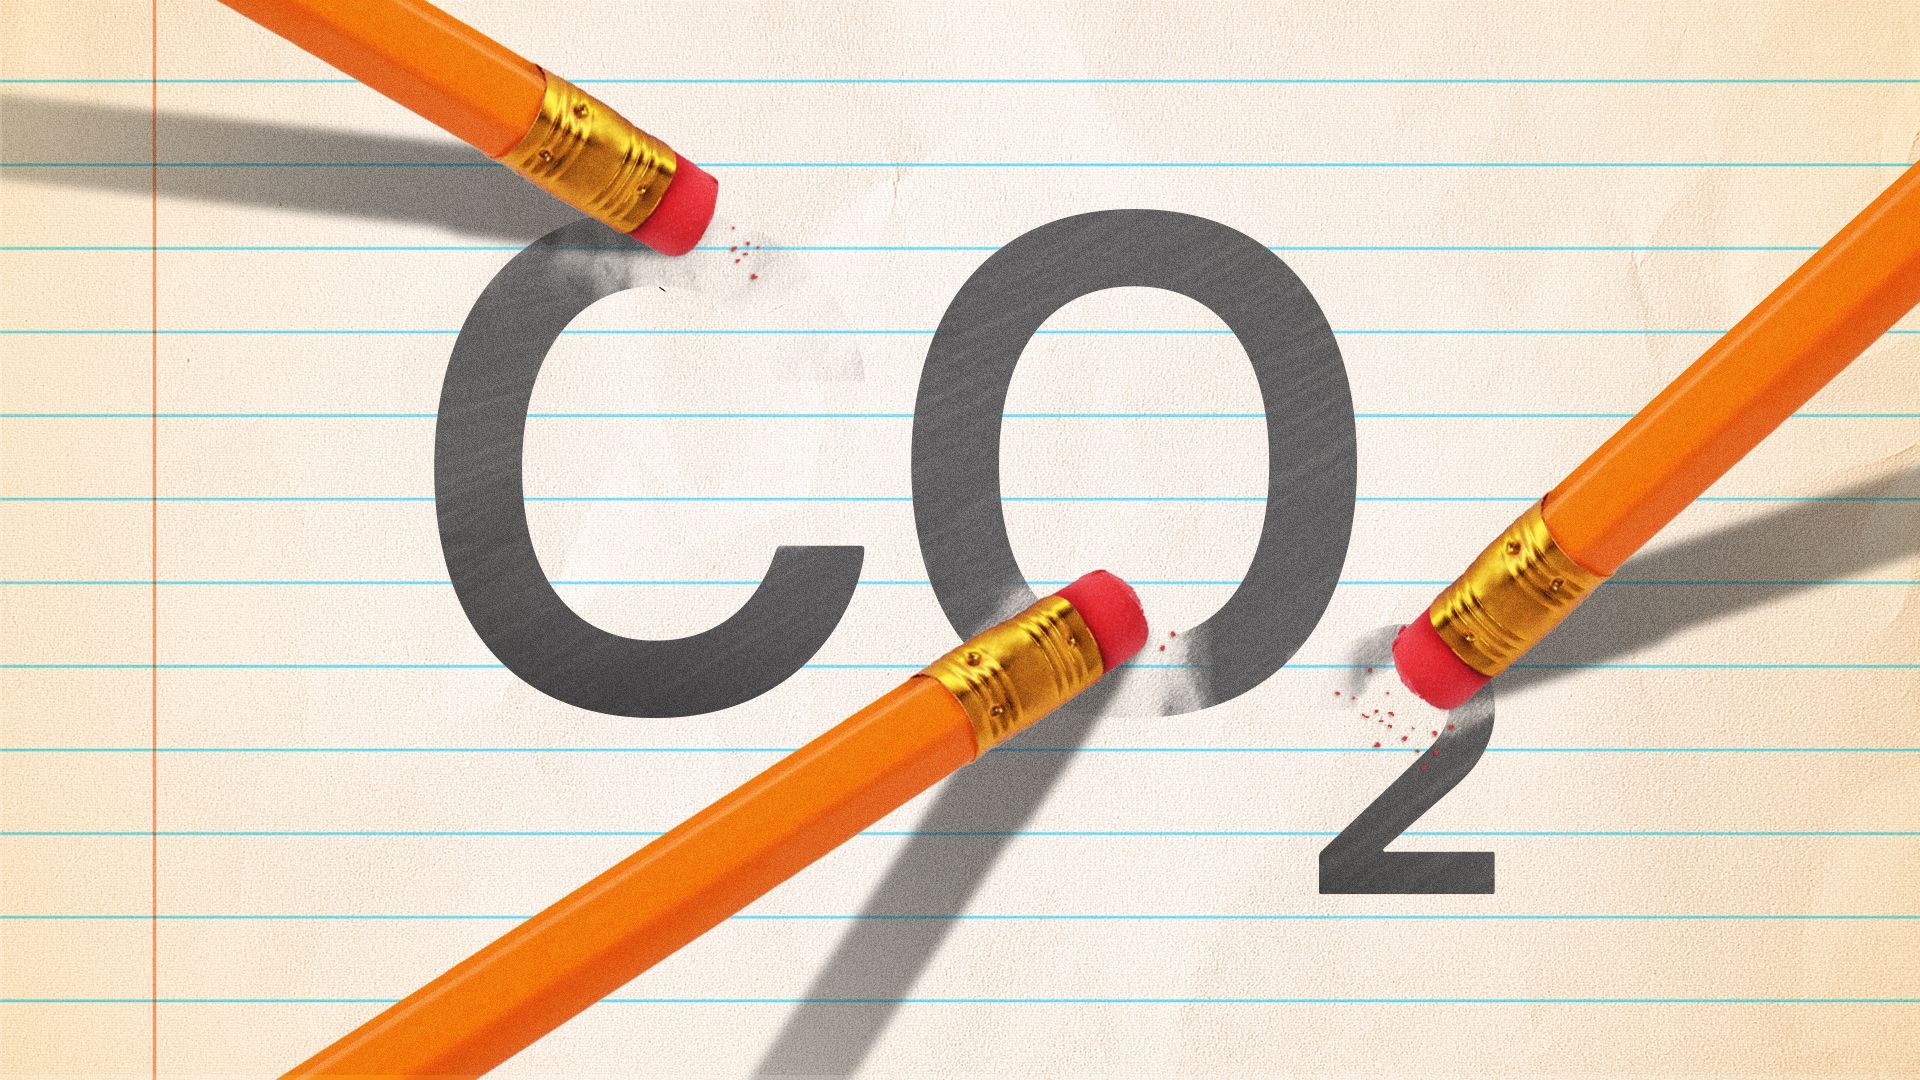 Illustration of three pencils erasing the phrase "CO2".